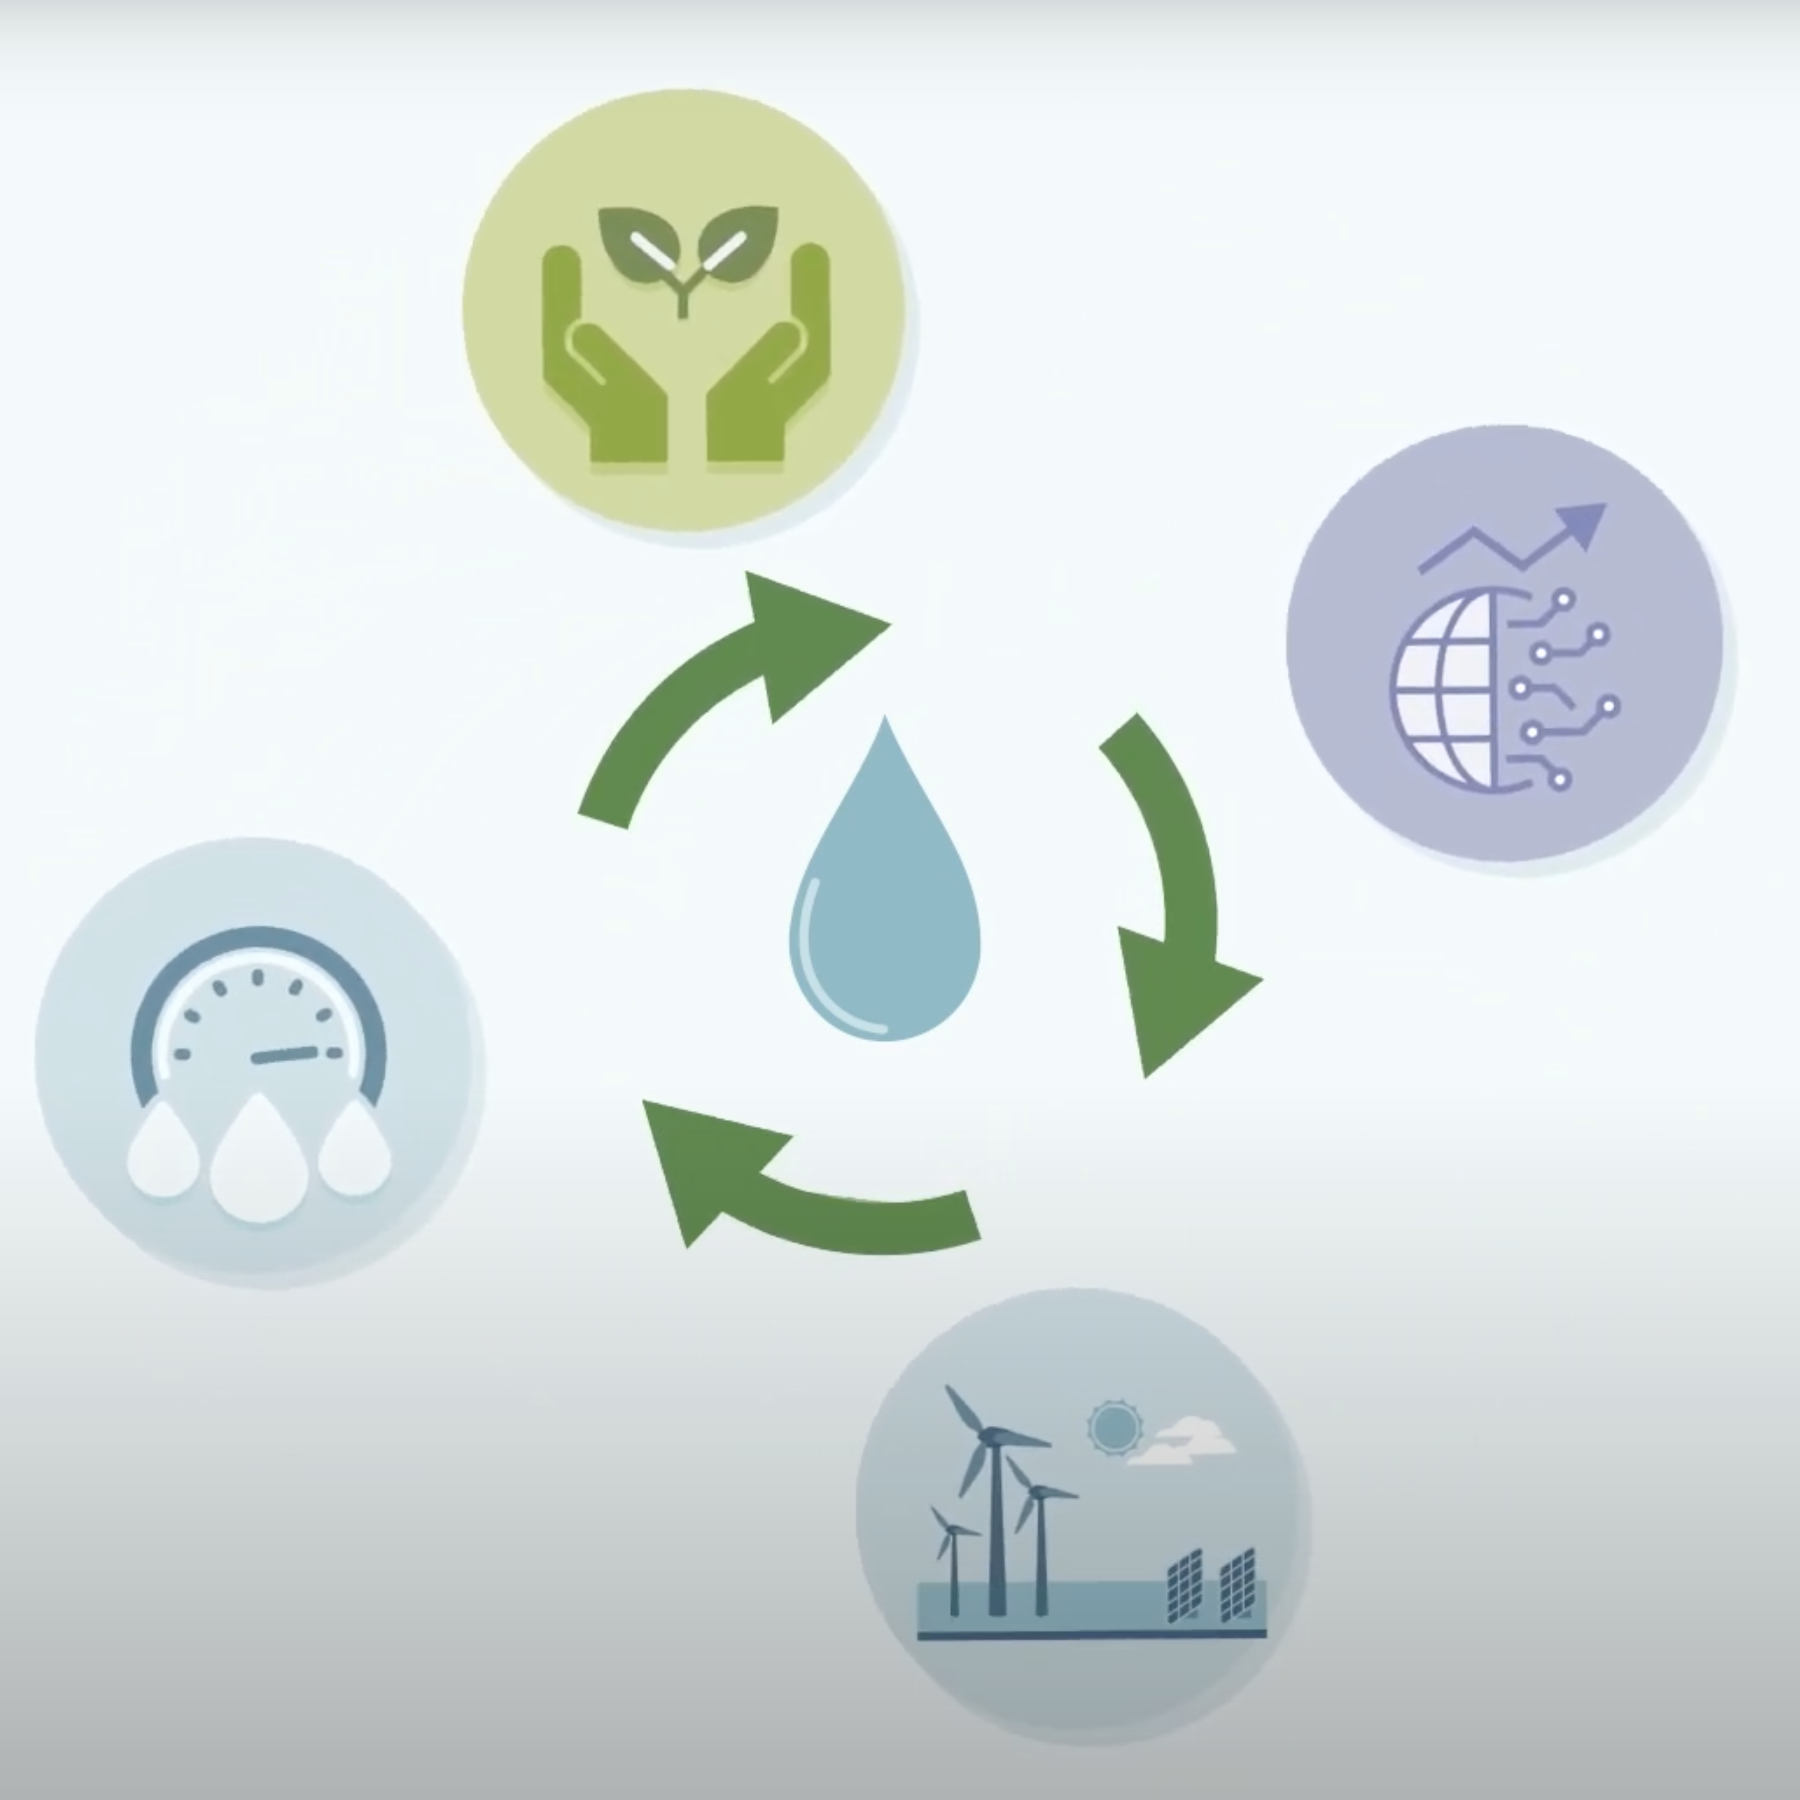 Rethinking water through the lens of circular economy